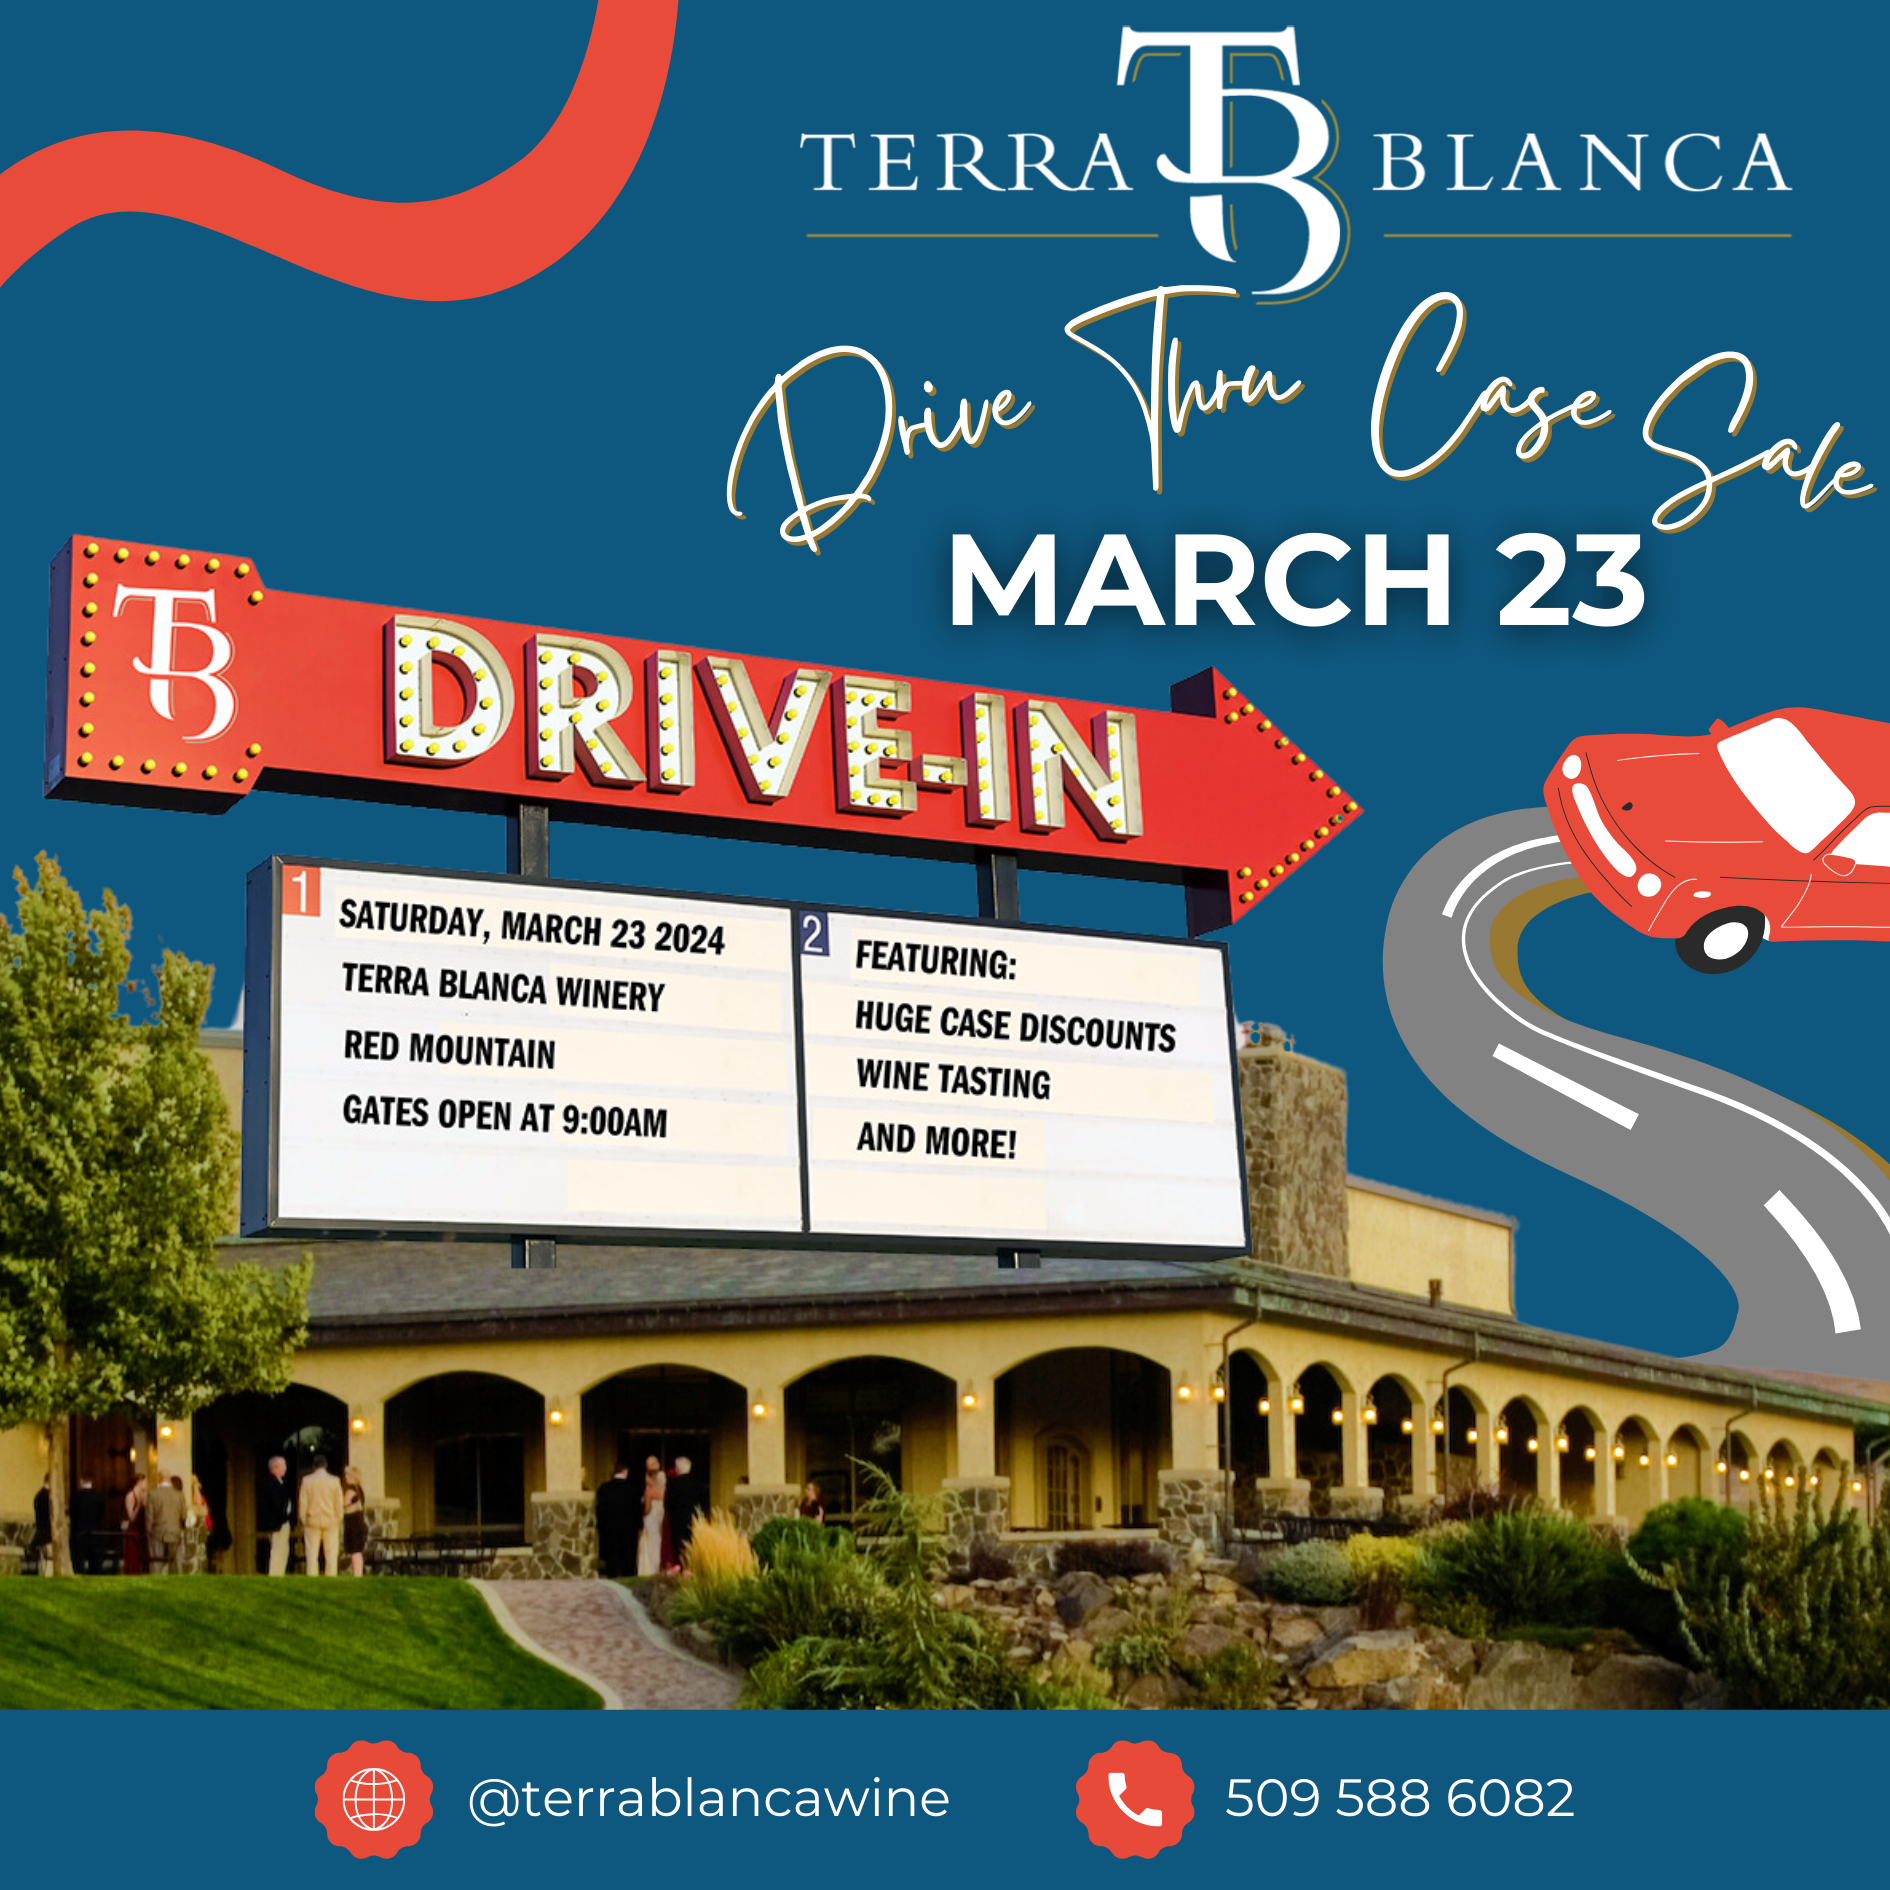 Drive Thru Case Sale March 23 at Terra Blanca Winery